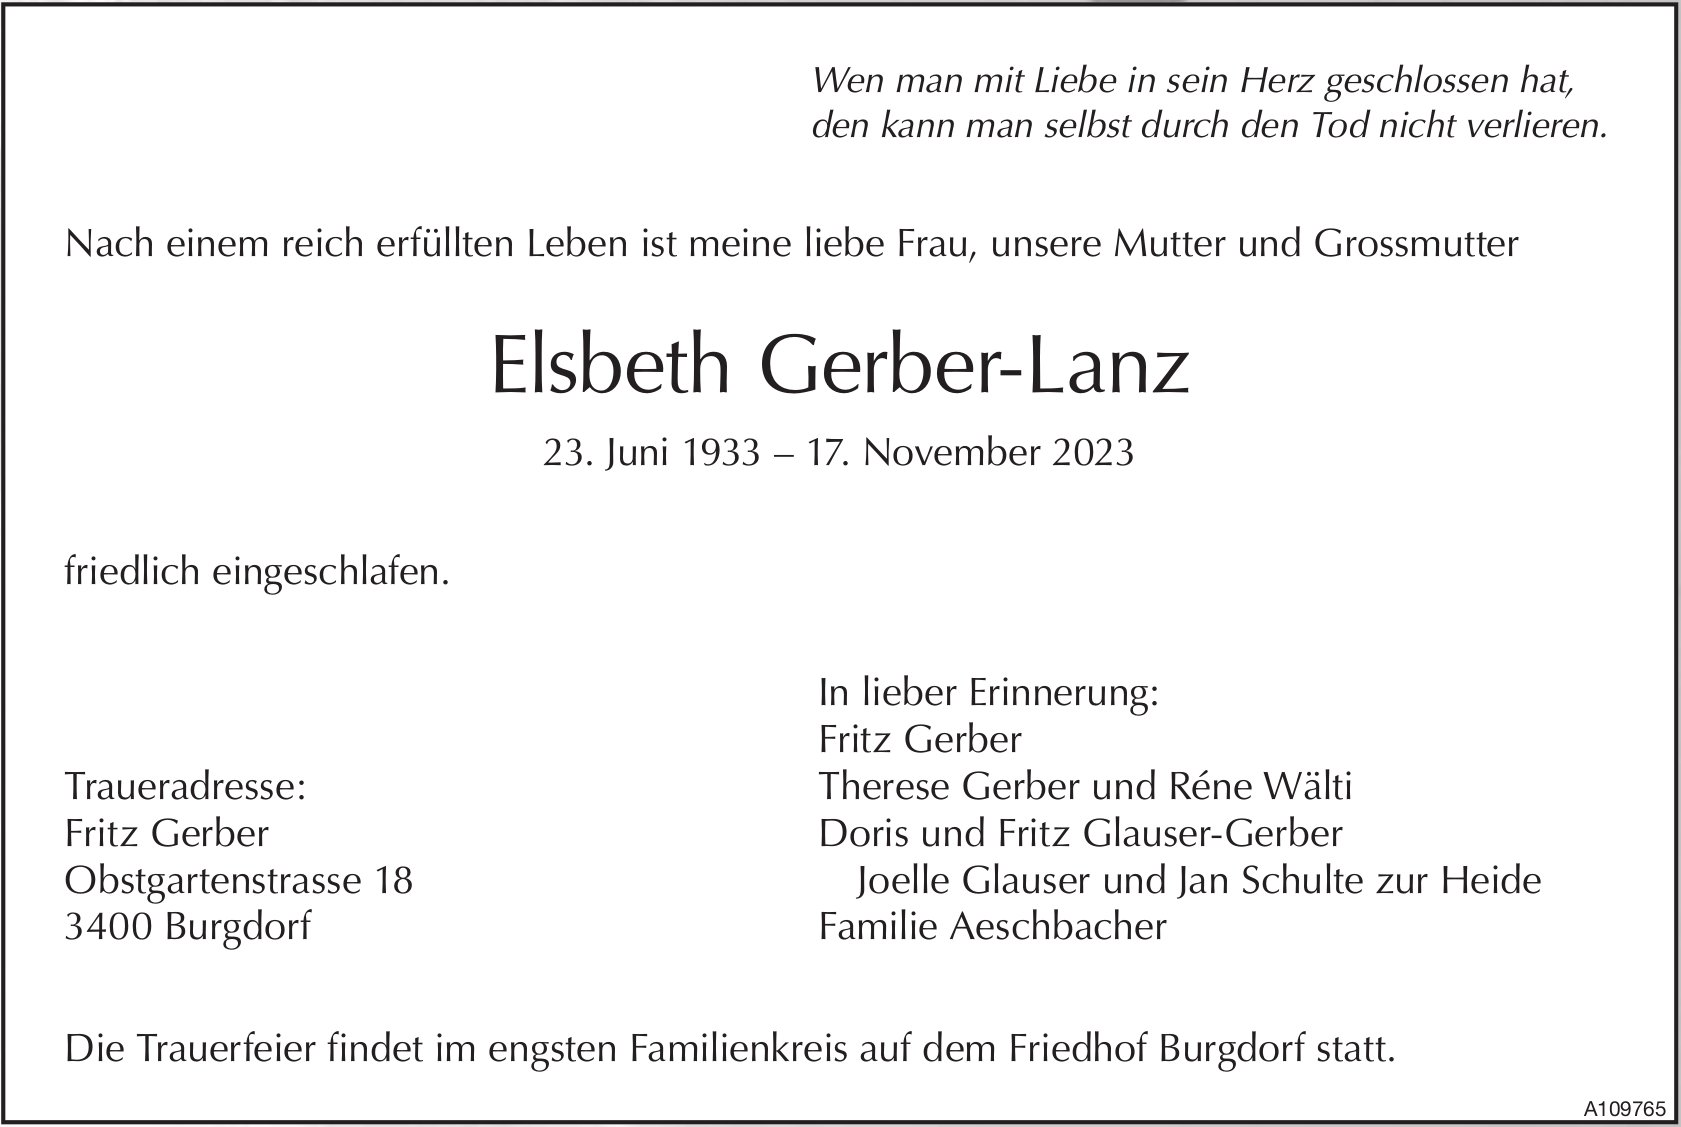 Elsbeth Gerber-Lanz, November 2023 / TA